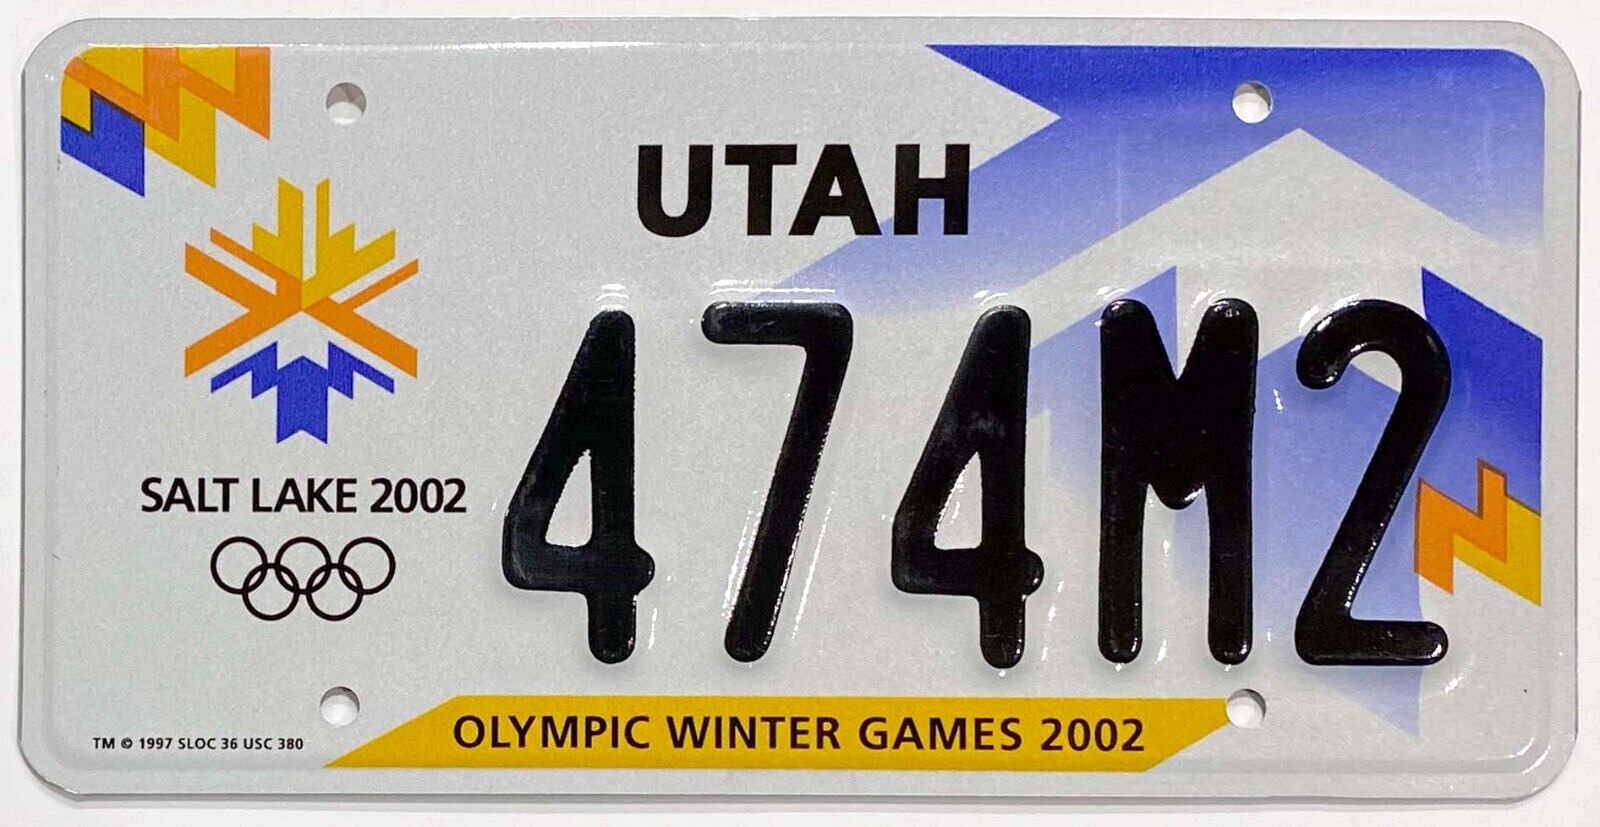 2002 United States Utah Olympic Winter Games Passenger License Plate 474M2